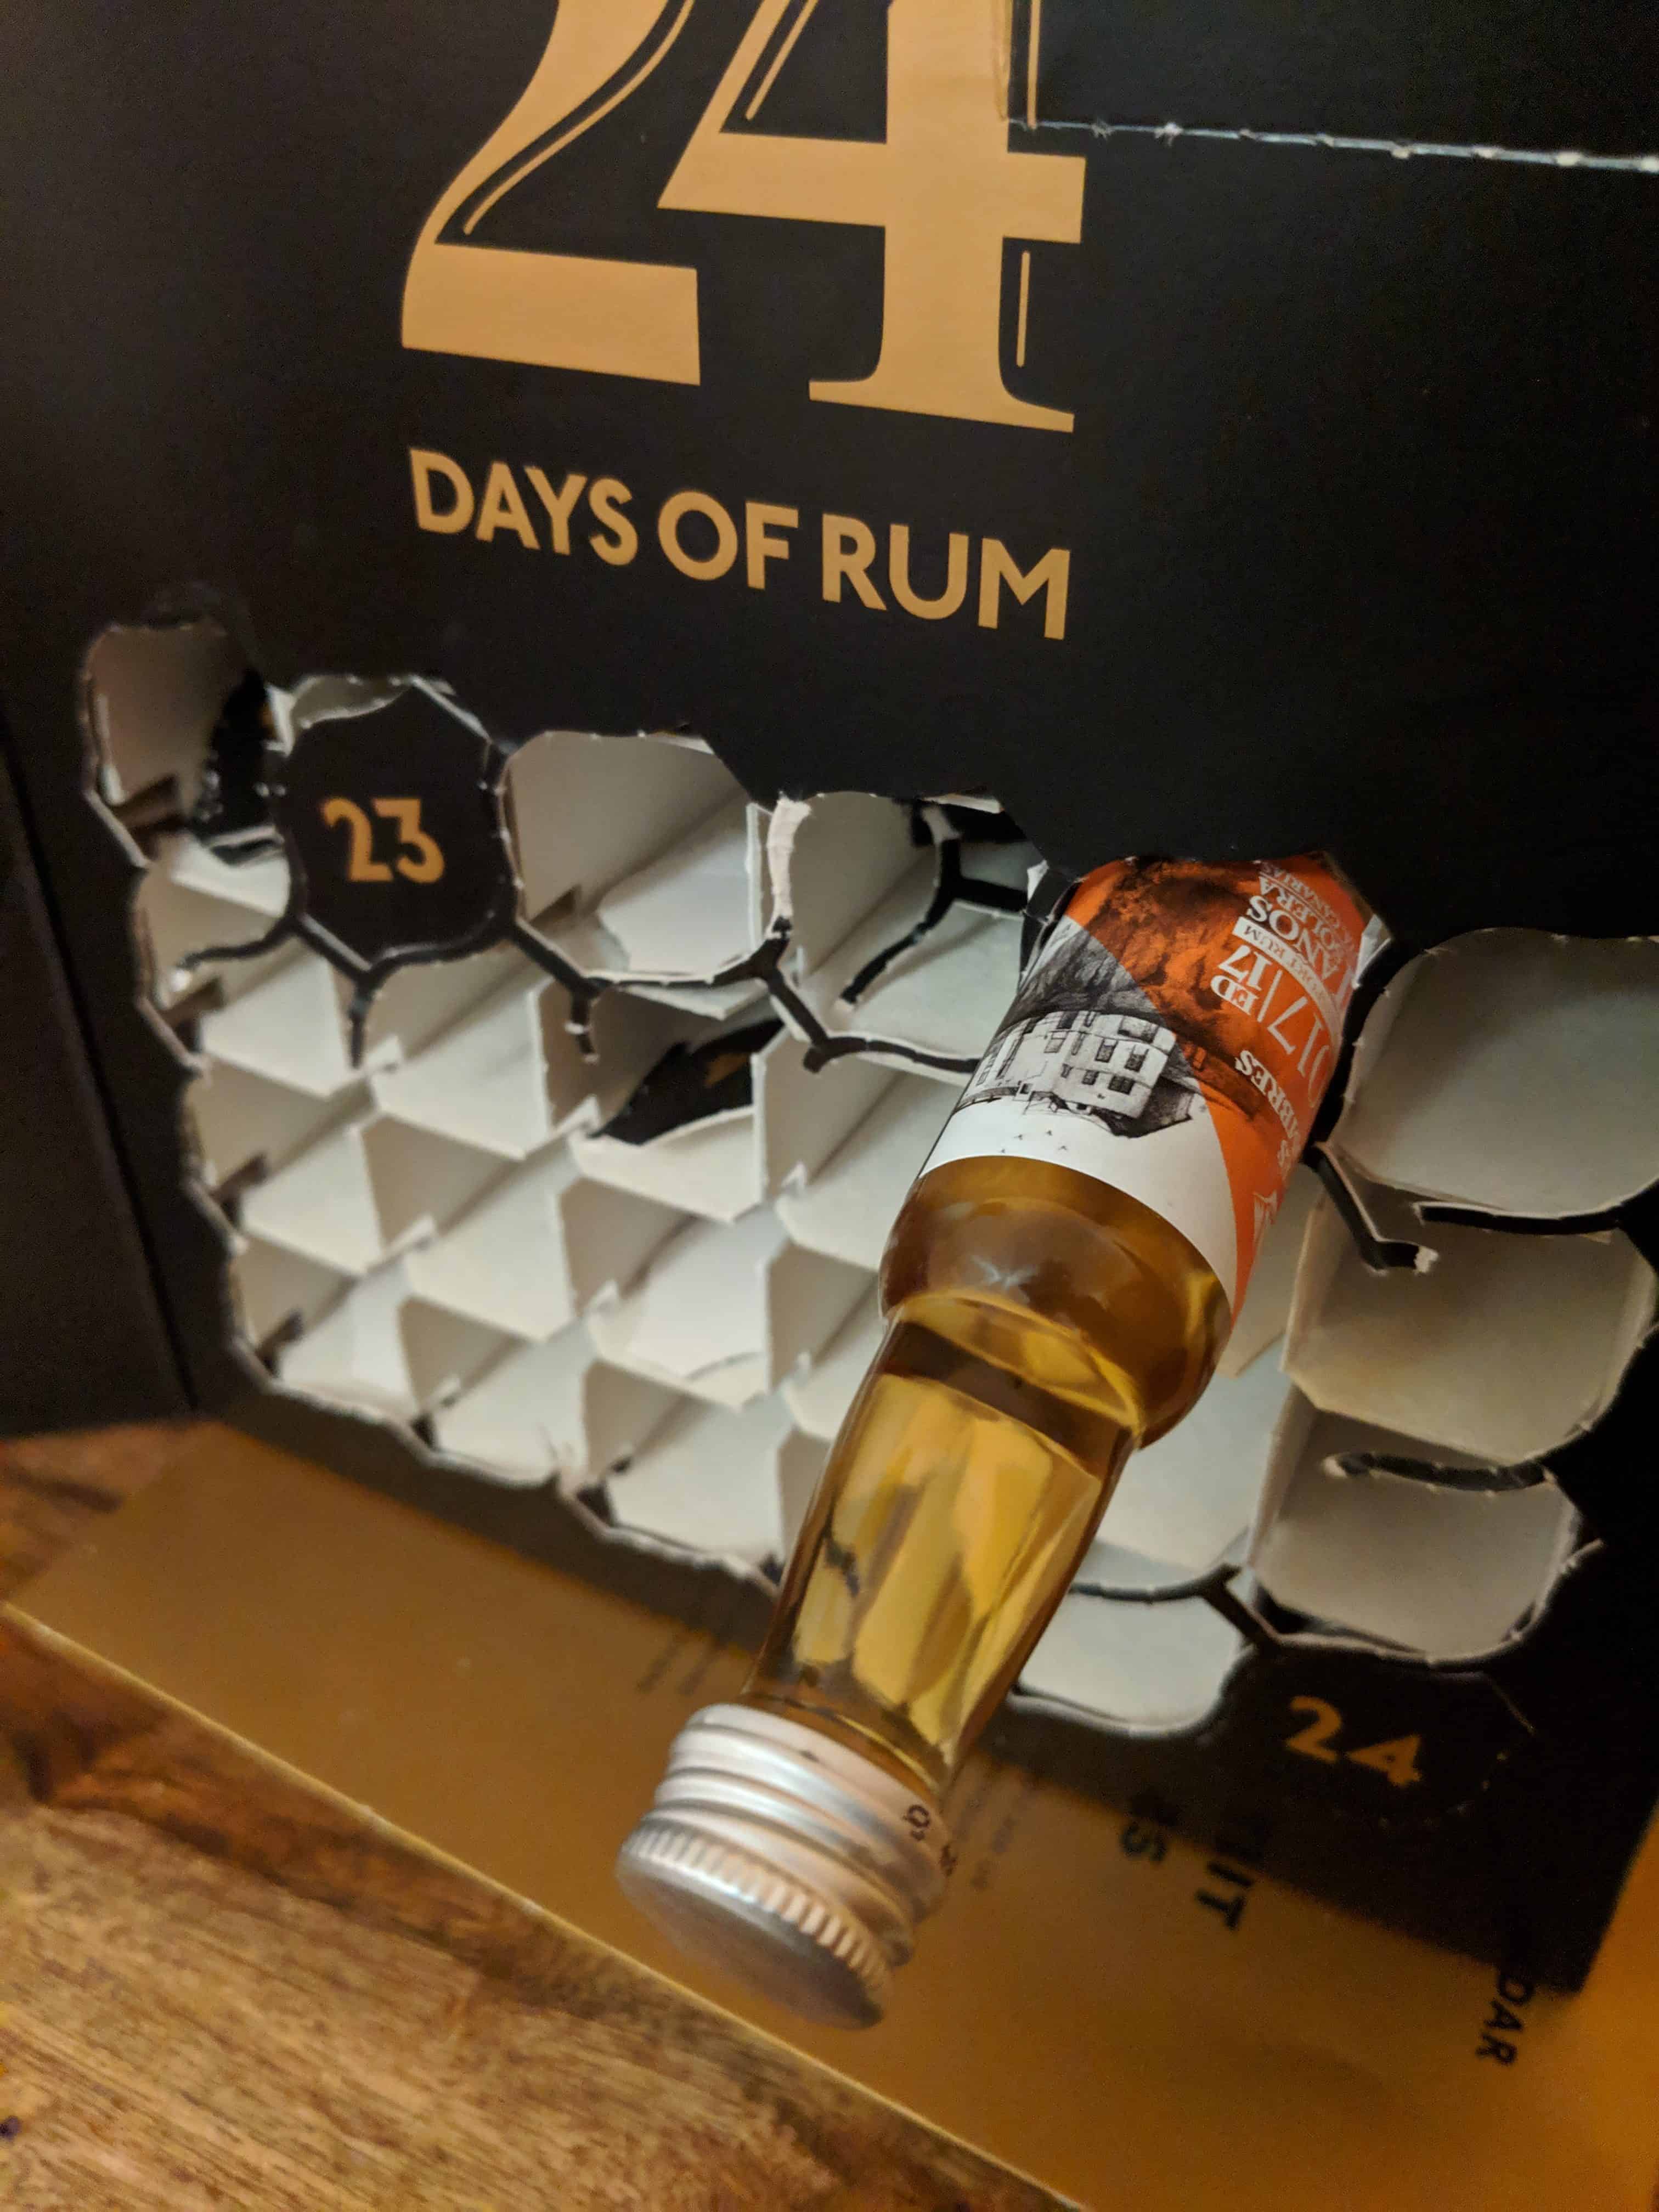 Tres Hombres La Palma VII Anos Ed. 17 – 22. rum rumového kalendáře 2018